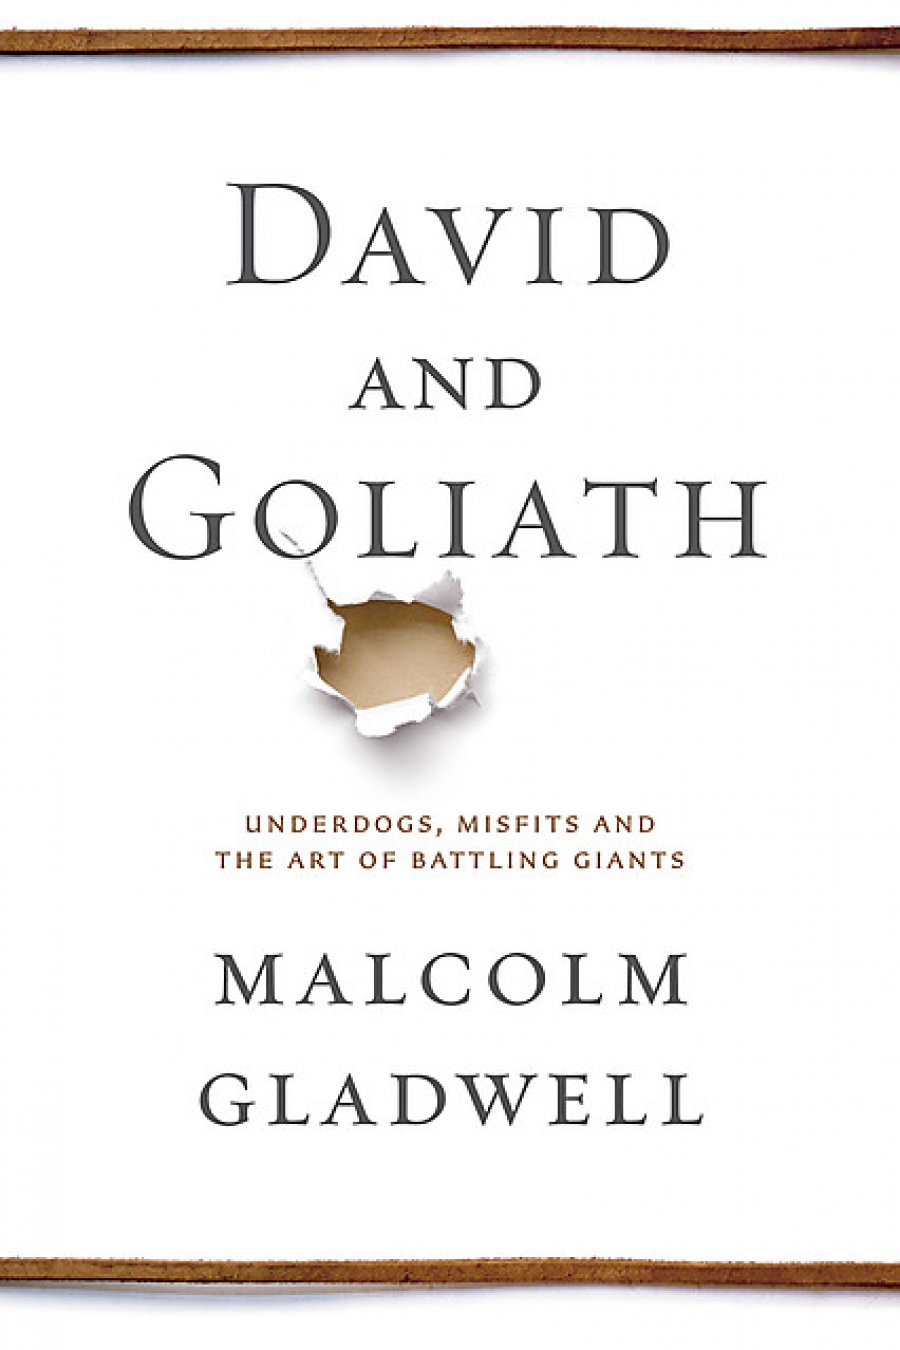 Literary analysis of david and goliath